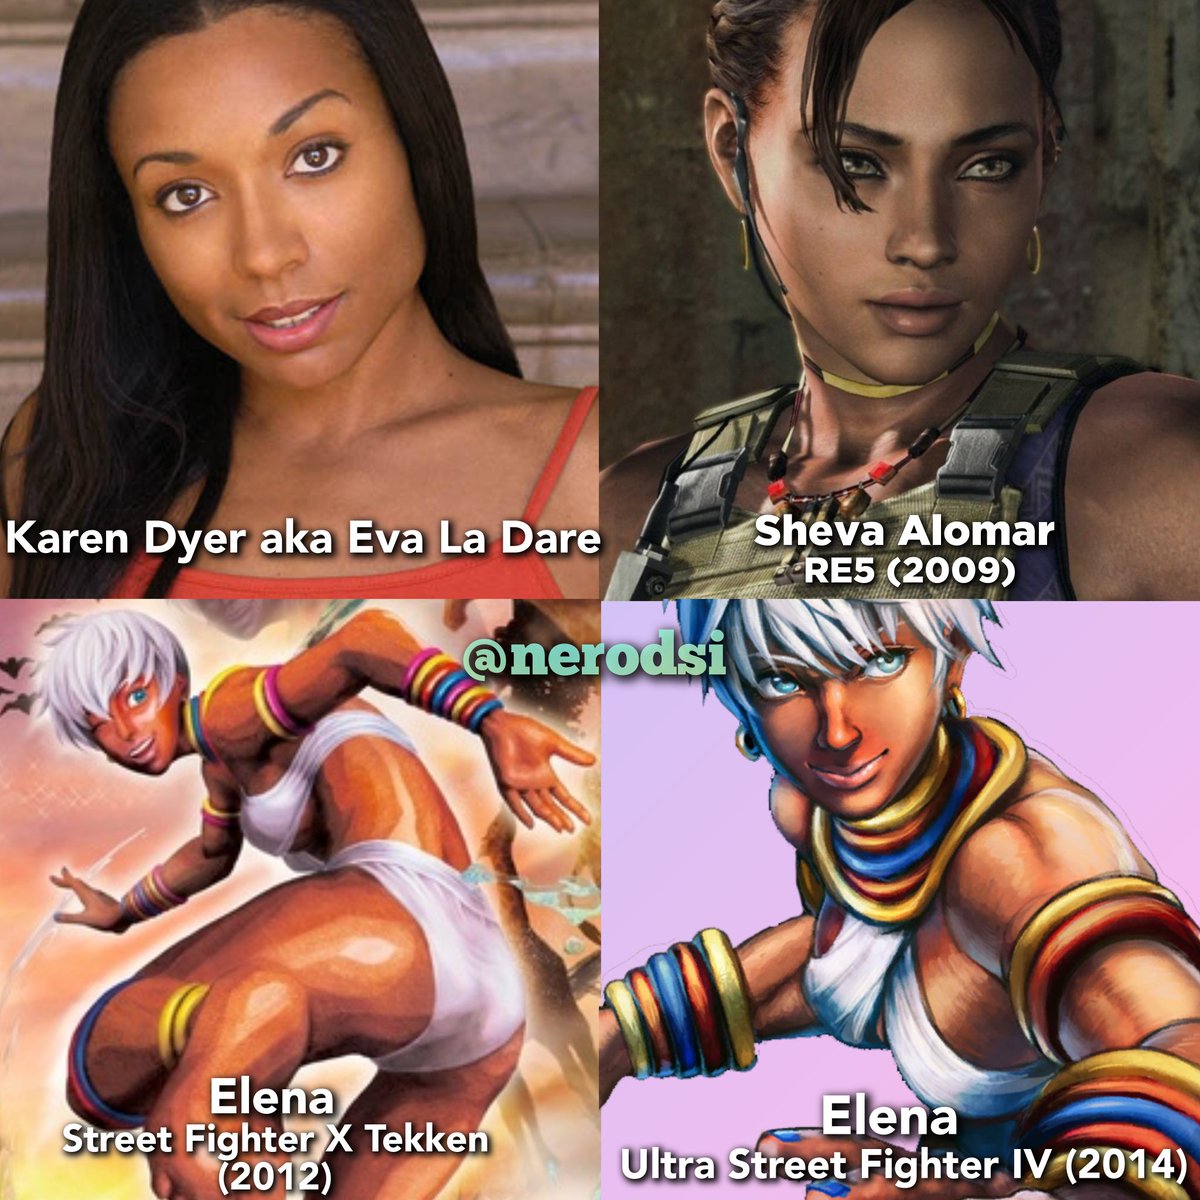 Karen Dyer aka Eva La Dare is the voice actress for Sheva Alomar in RE5 (2009) & Elena in Street Fighter X Tekken (2012) + Ultra Street Fighter IV (2014) (Made by me) #ResidentEvil #REBHFun #StreetFighter #RE #REBH28th #RE5 #ResidentEvil5 #ShevaAlomar #Biohazard #Capcom